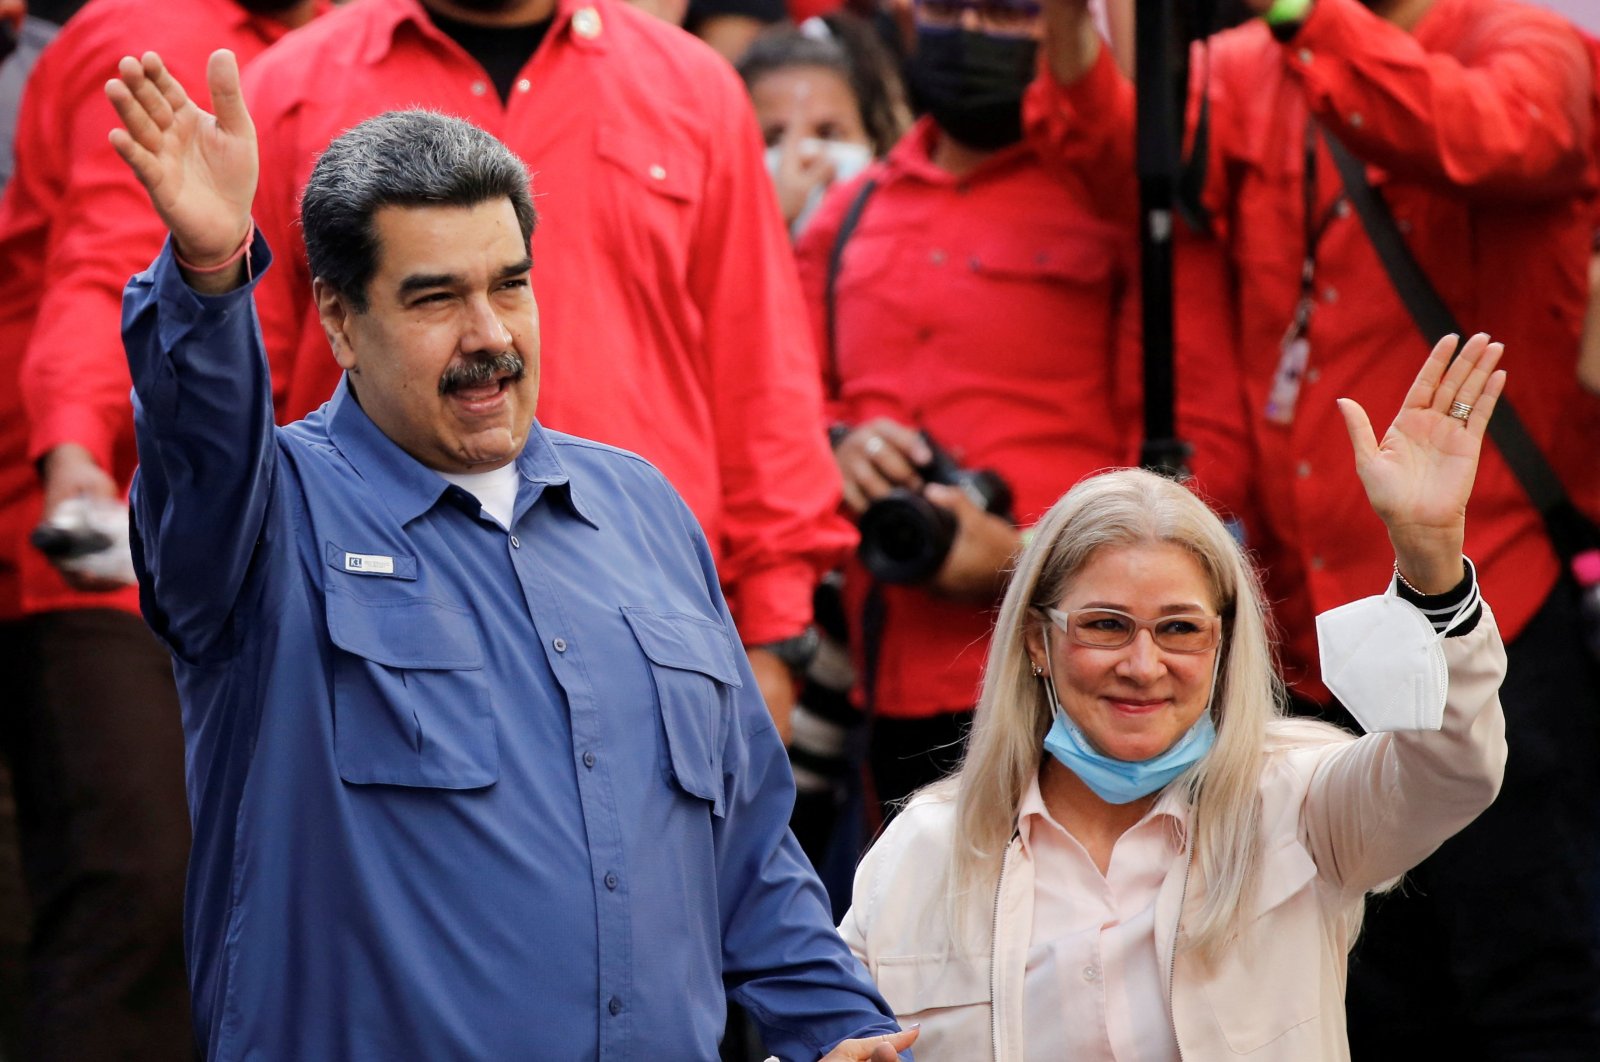 Venezuela frees 7 jailed Americans in exchange for Maduro relatives